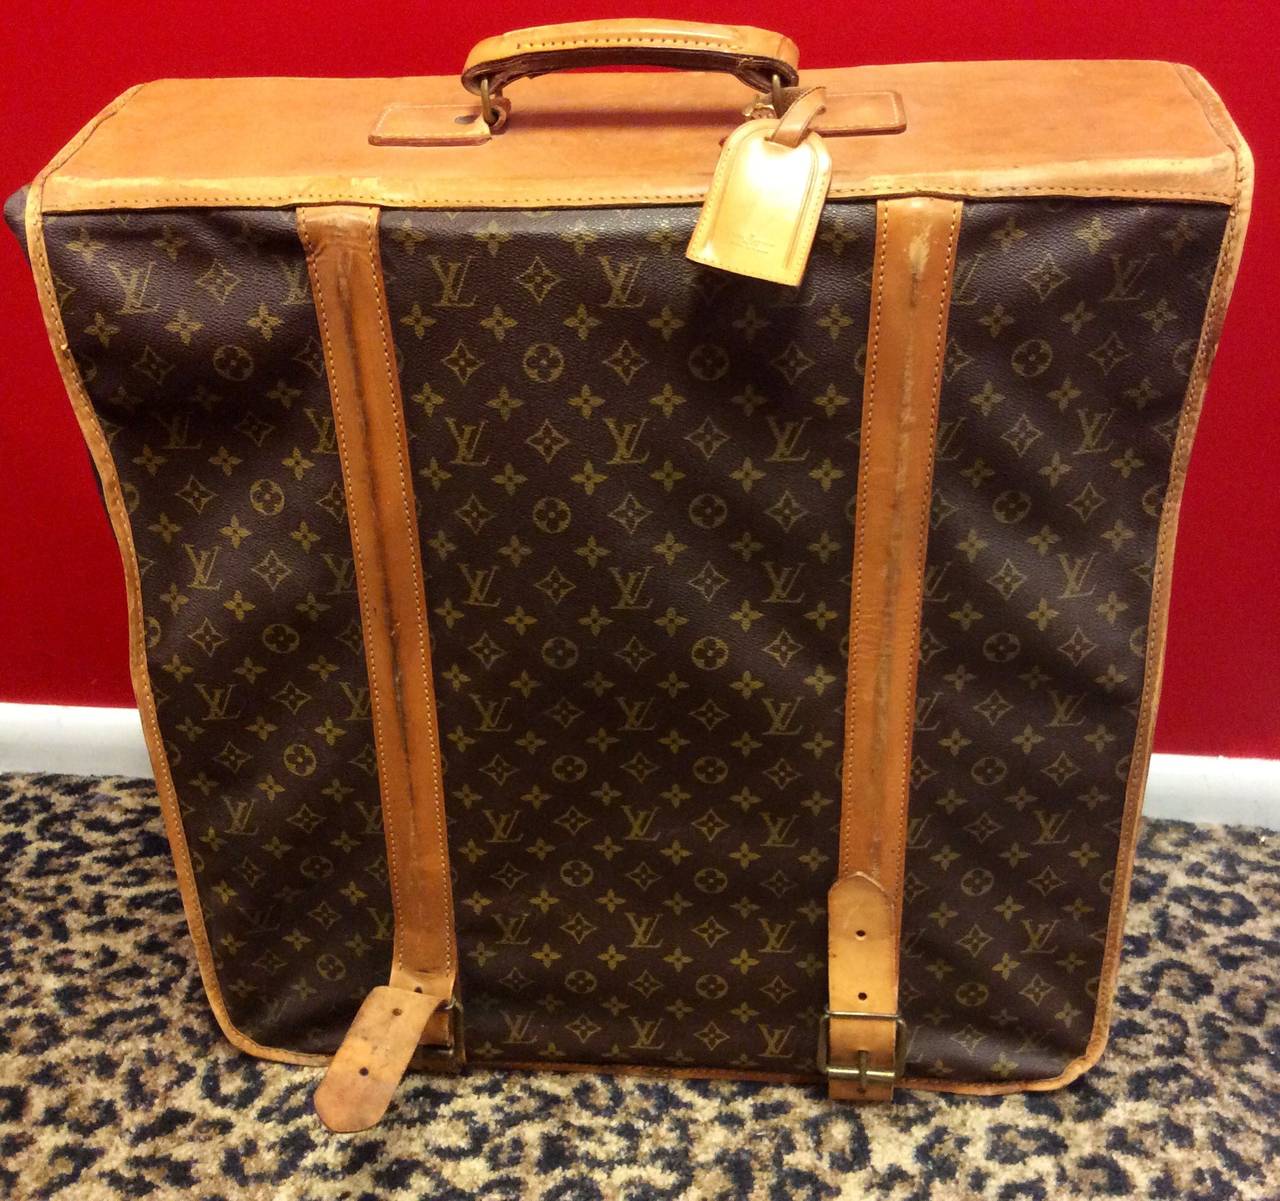 This is a rare  Louis Vuitton monogram garment travel bag
Multi Hangers
Separate zipper compartment 
Measurements :
51